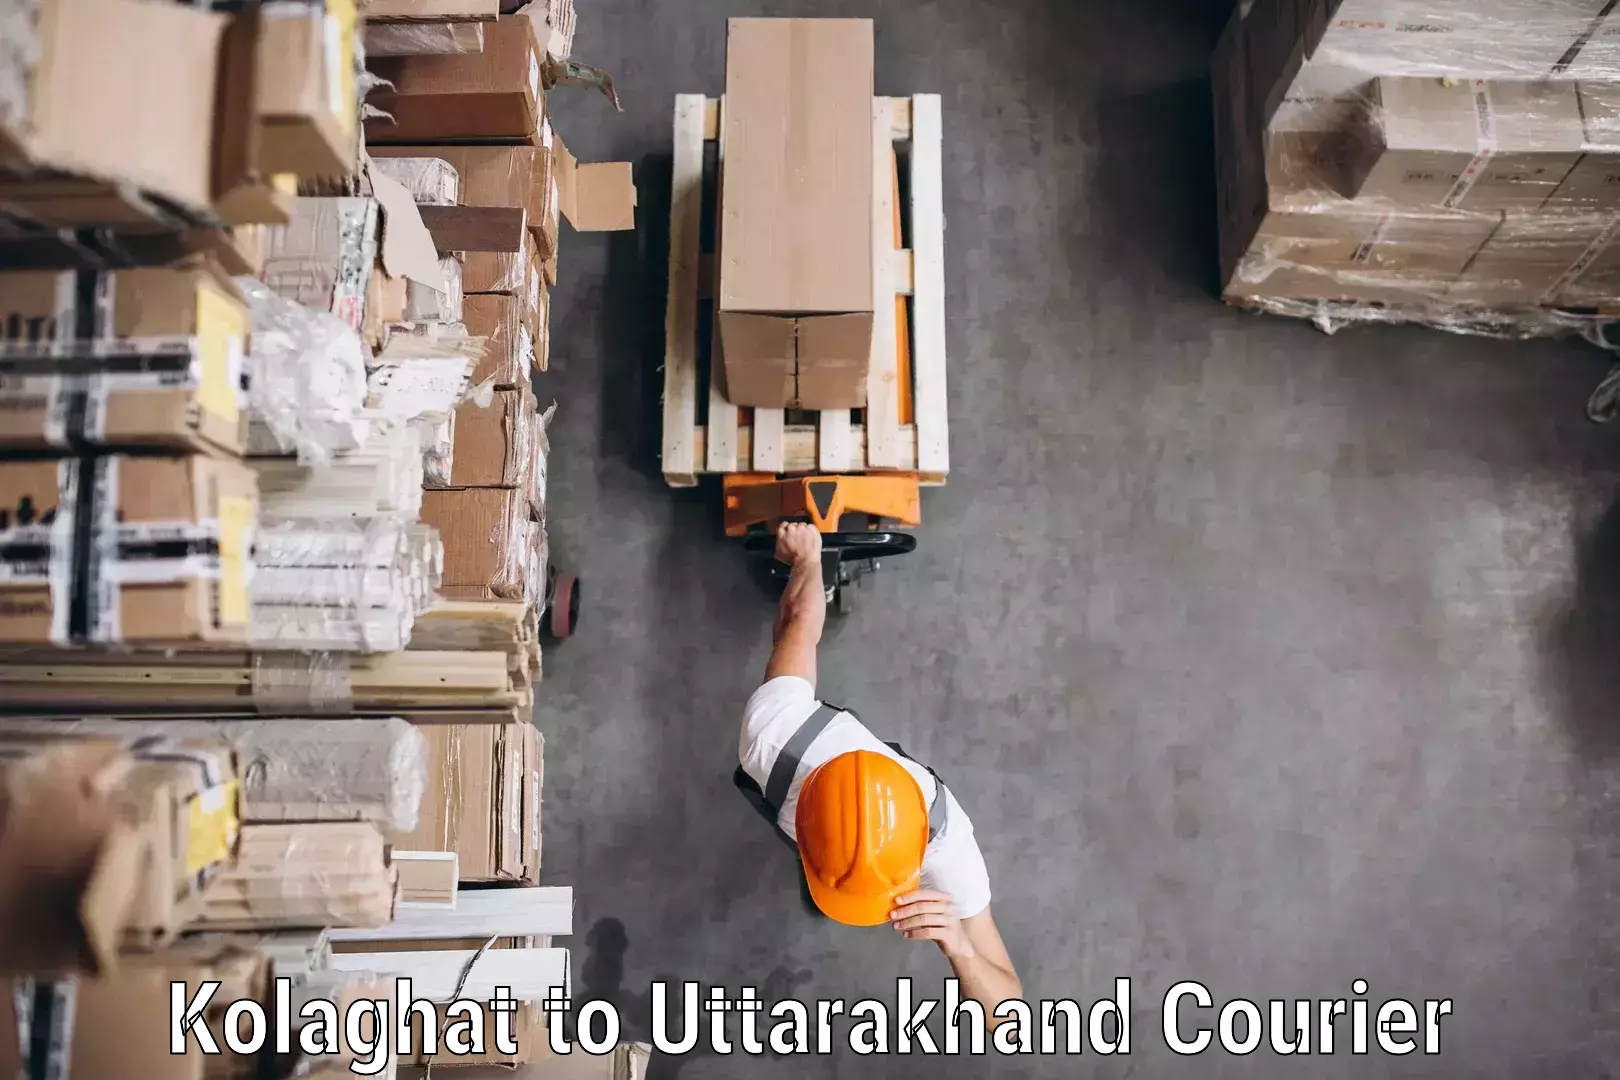 Courier service efficiency Kolaghat to Dehradun